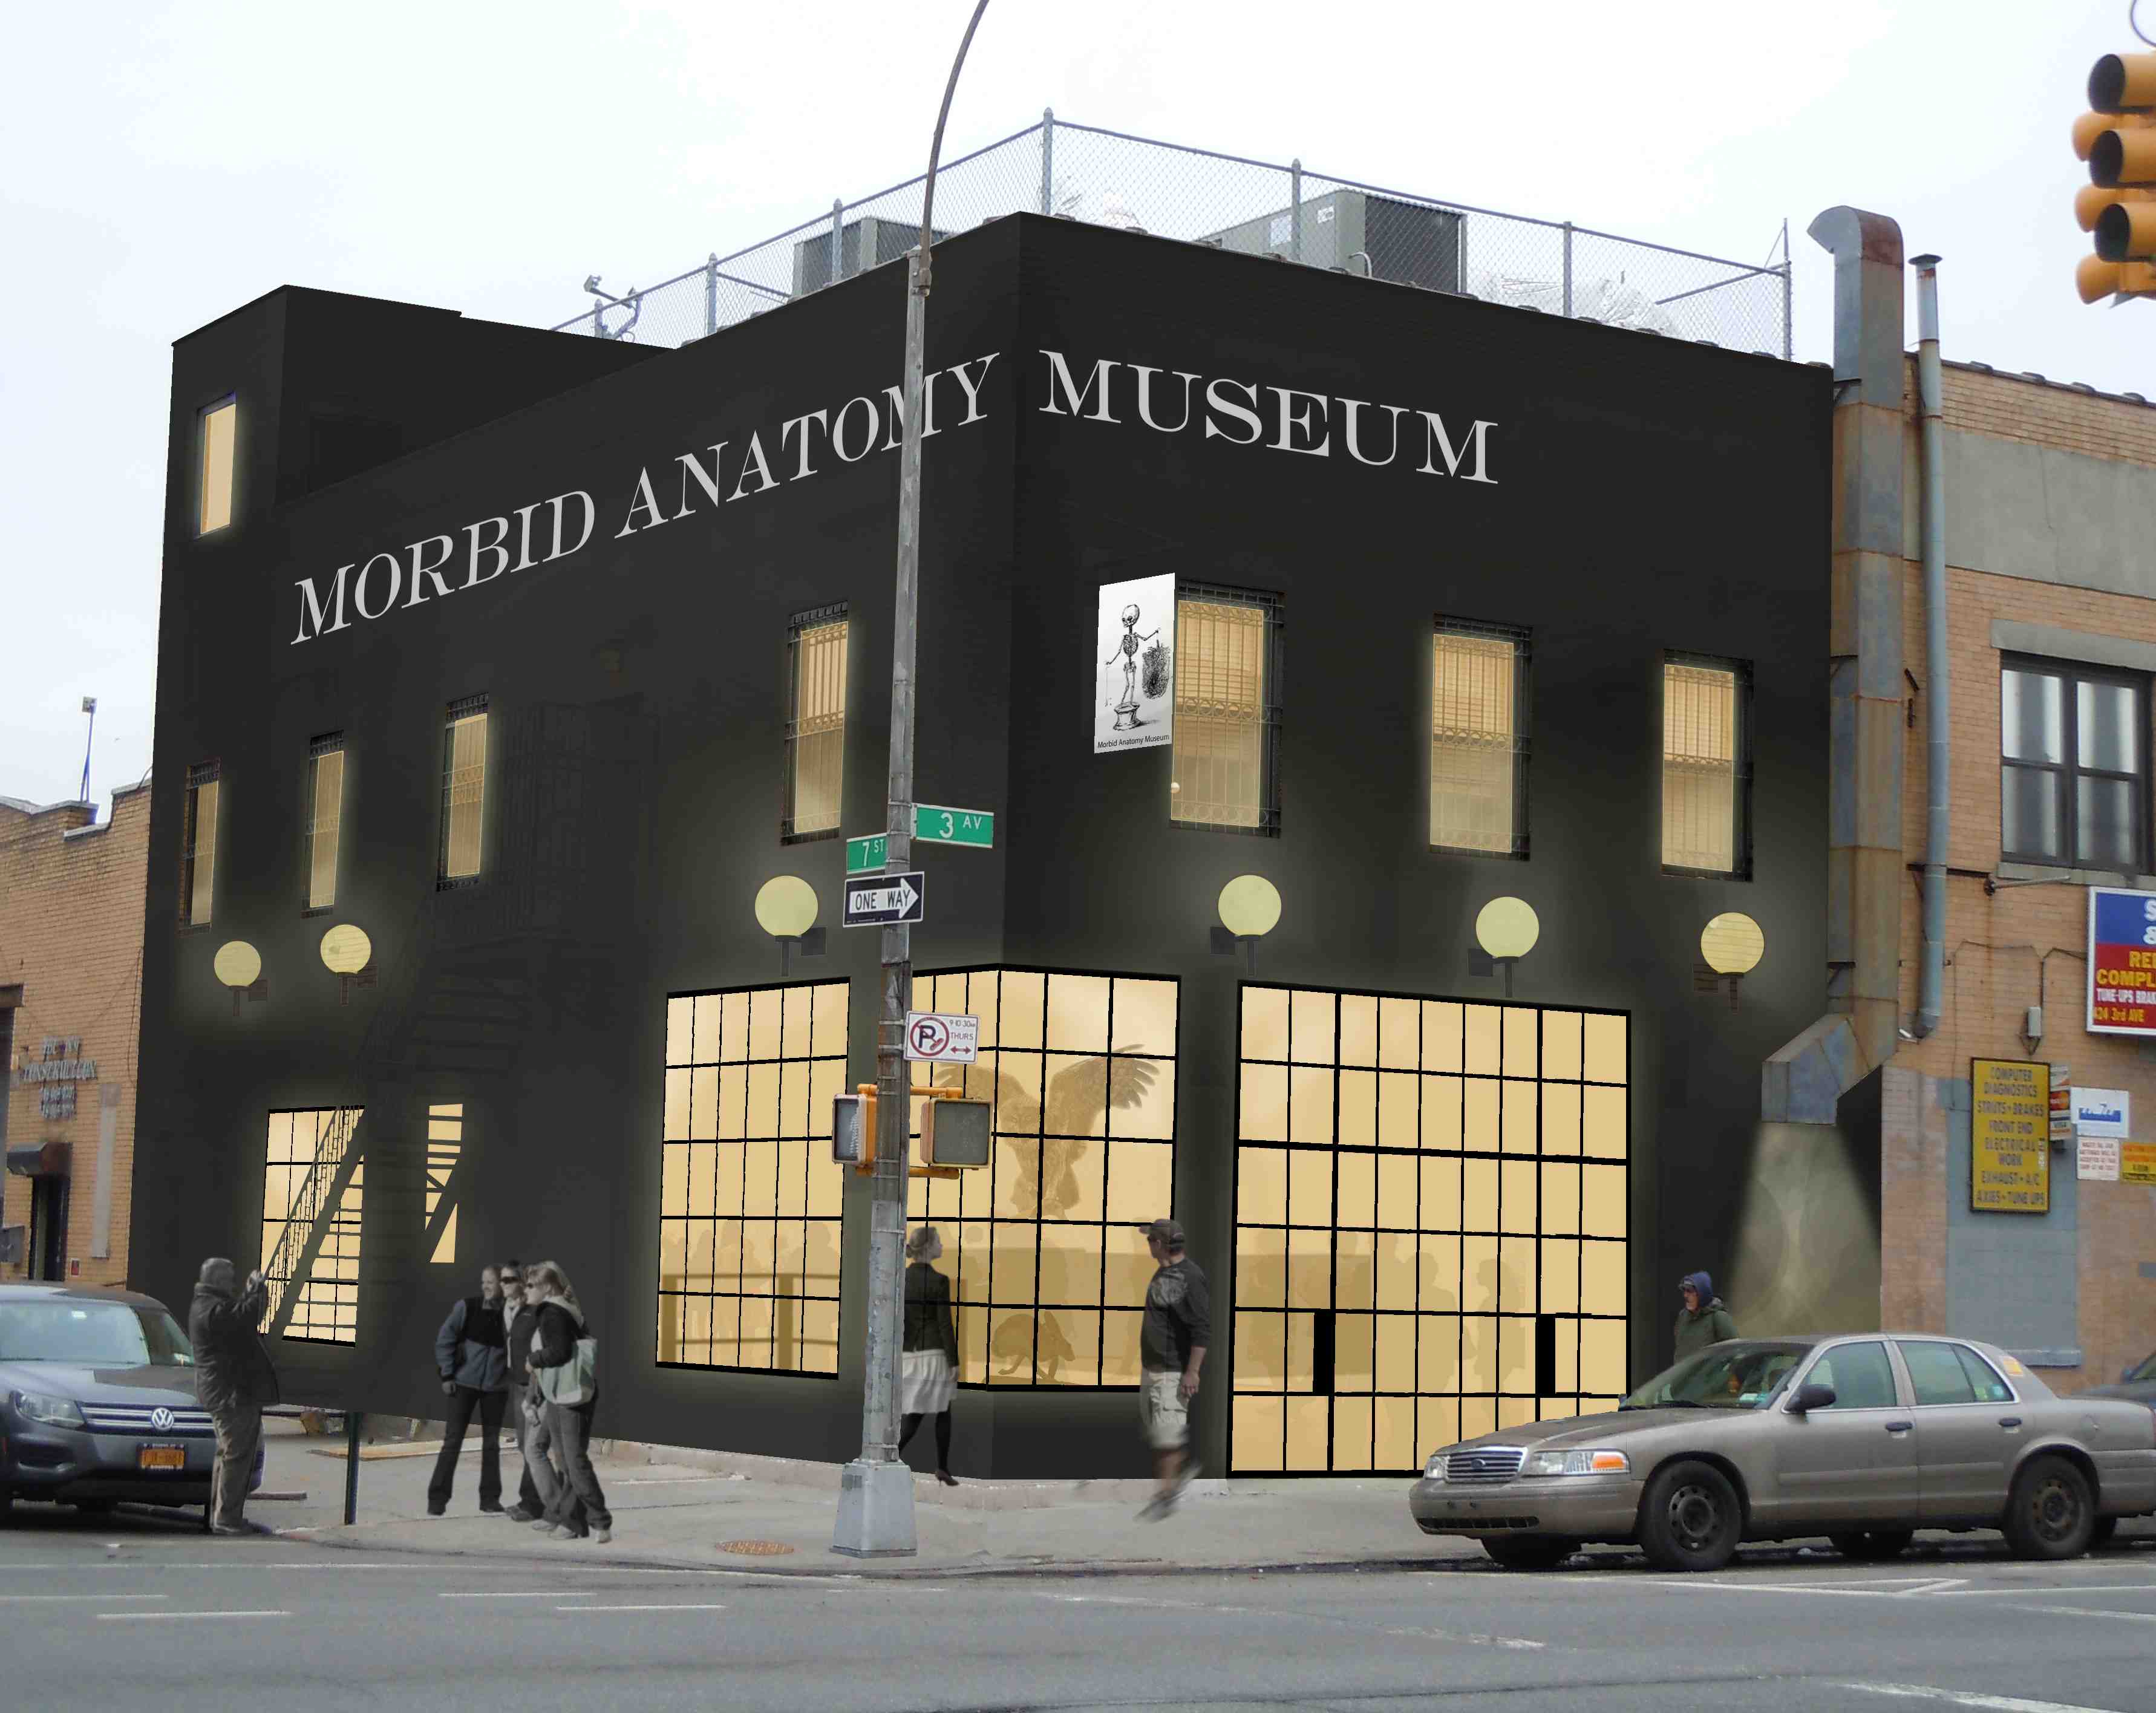 Robert Kirkbride to Speak at Morbid Anatomy Museum November 11